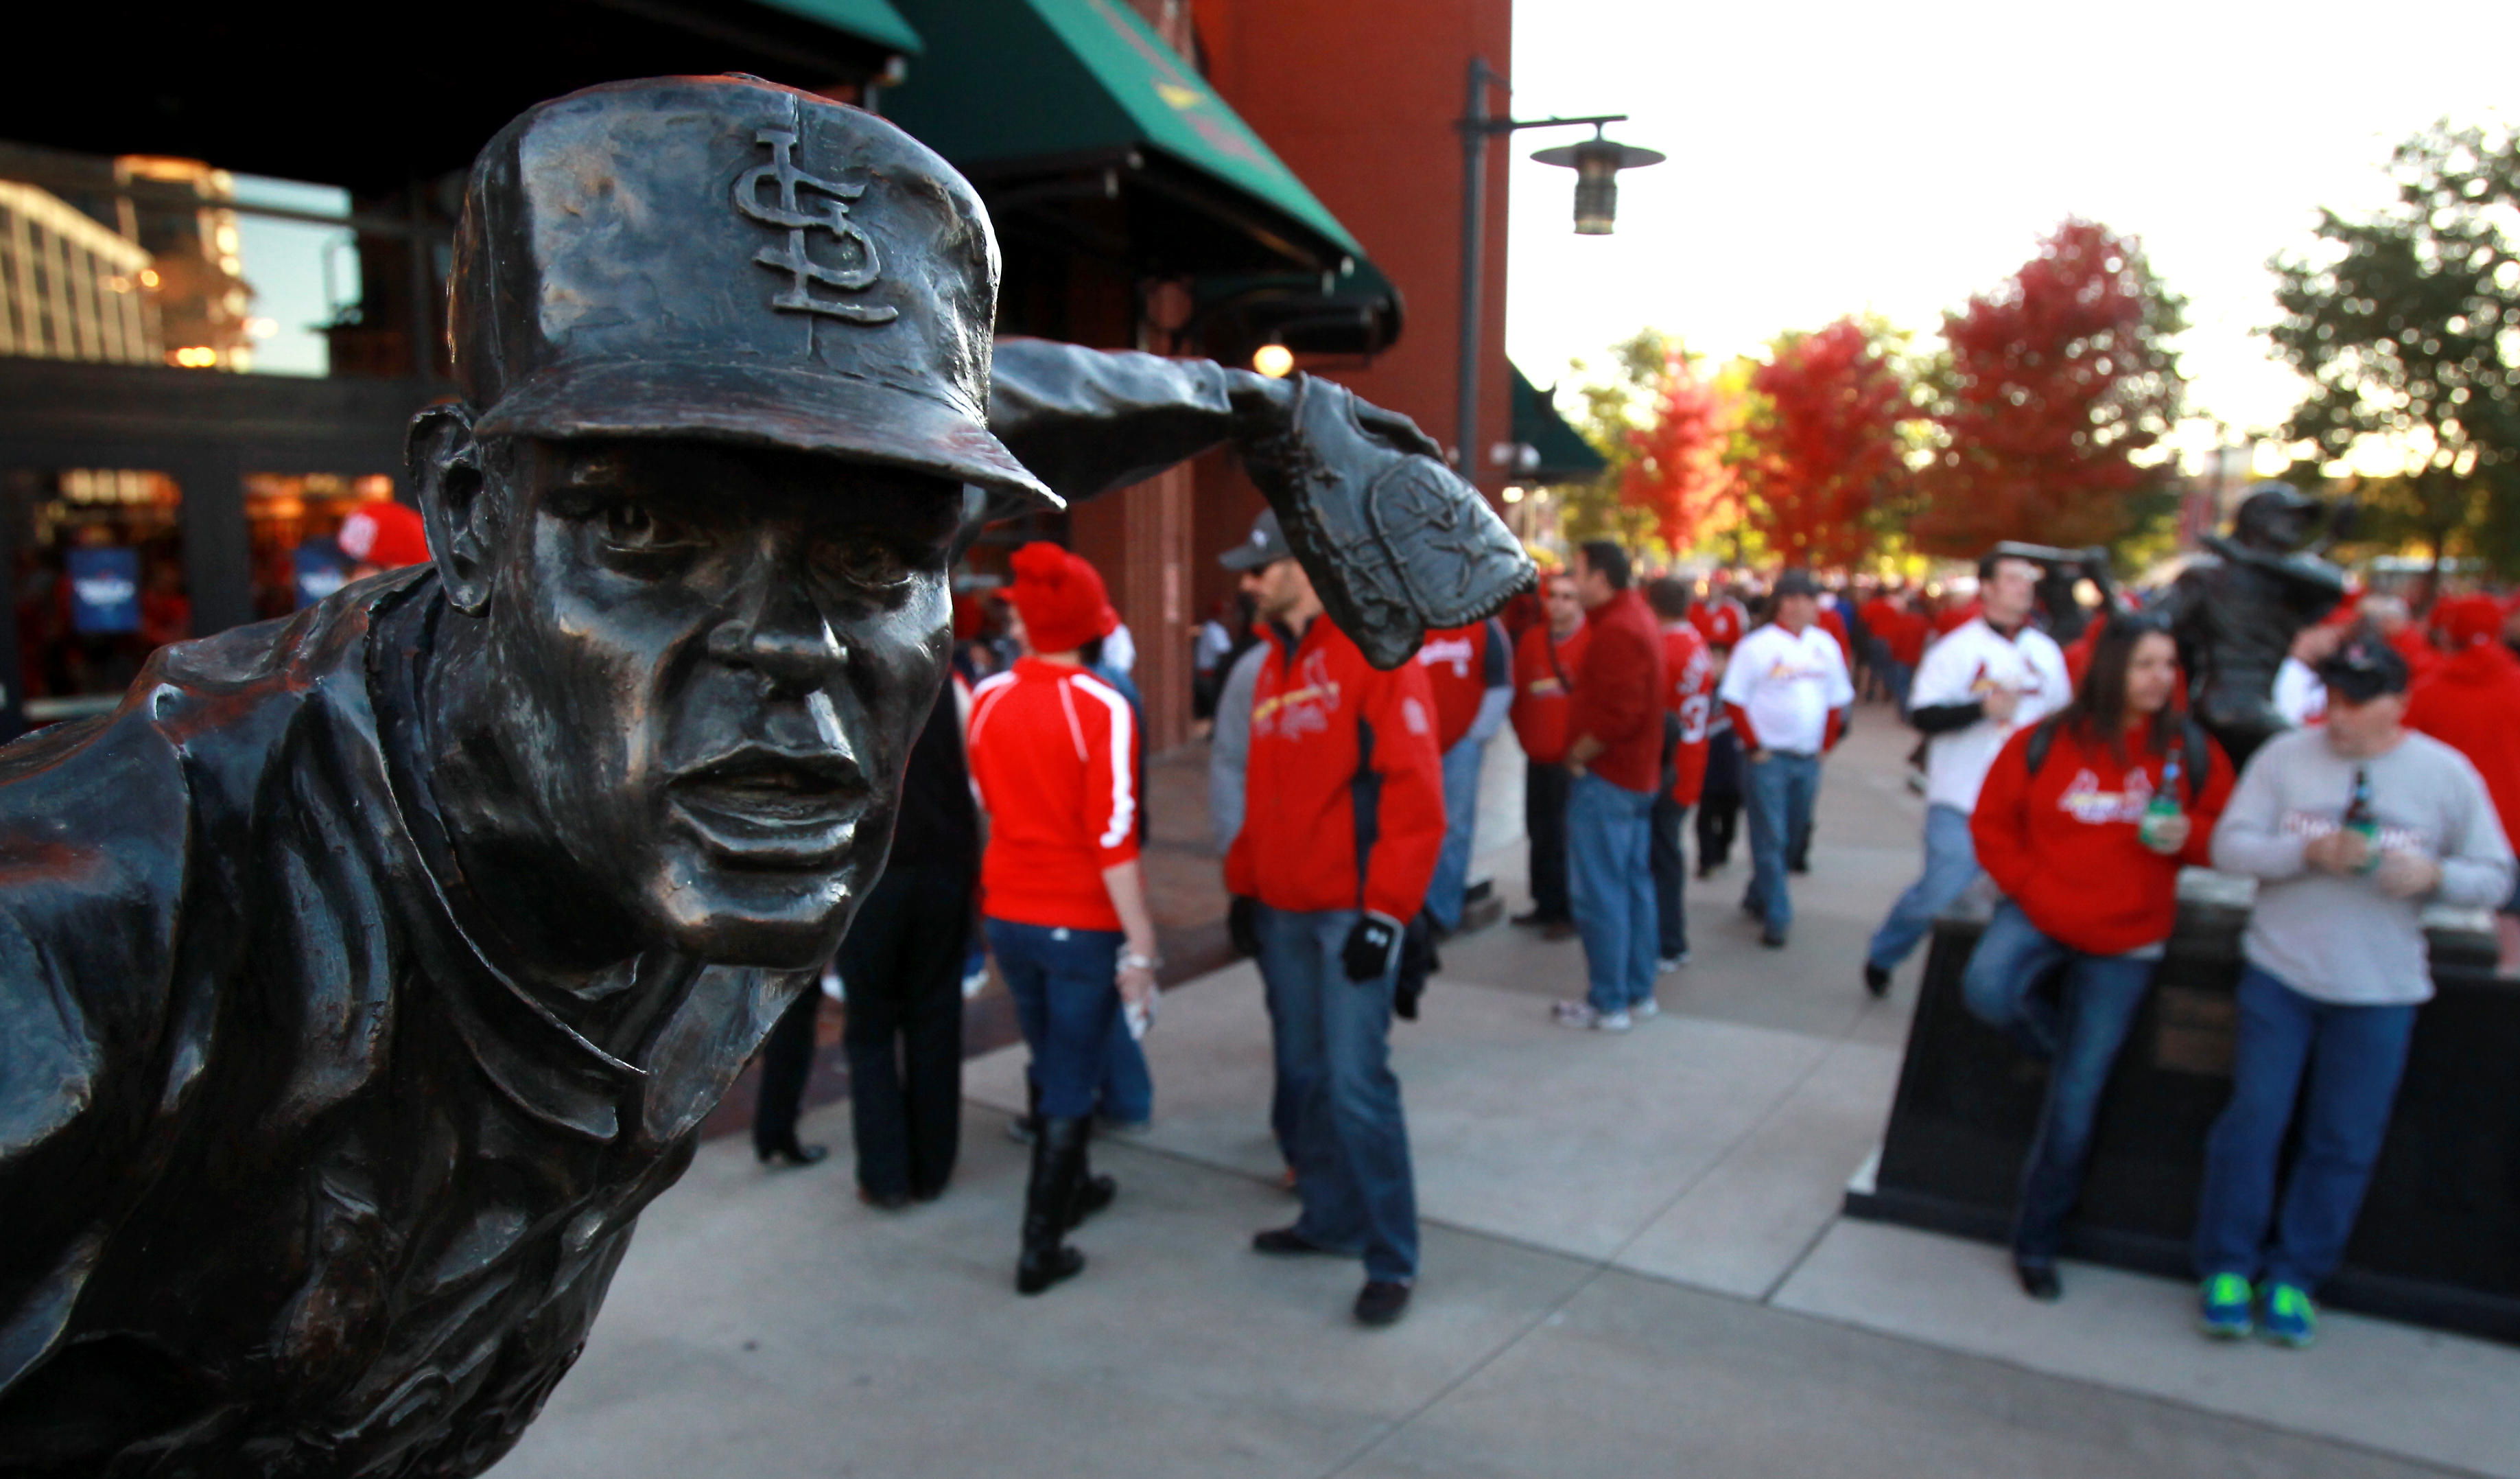 Bob Gibson, Baseball Hall of Fame pitcher, dies at 84